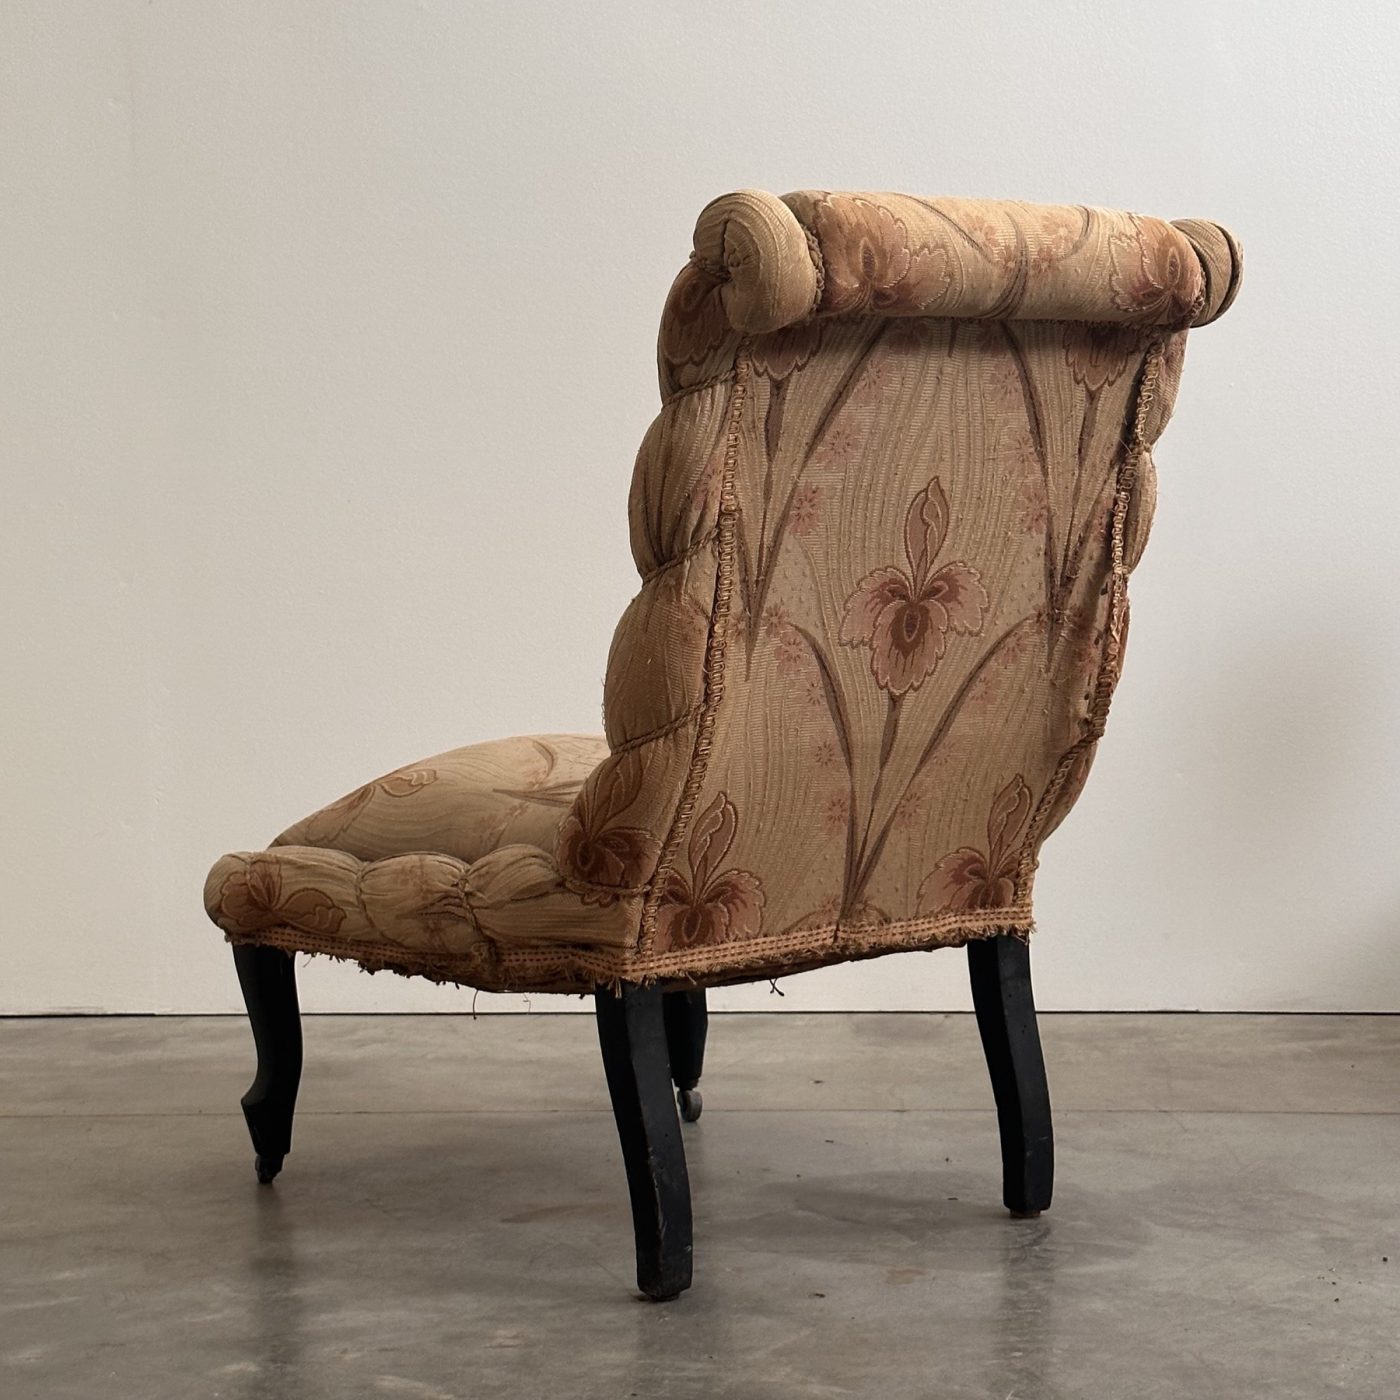 objet-vagabond-napoleon3-chair0001